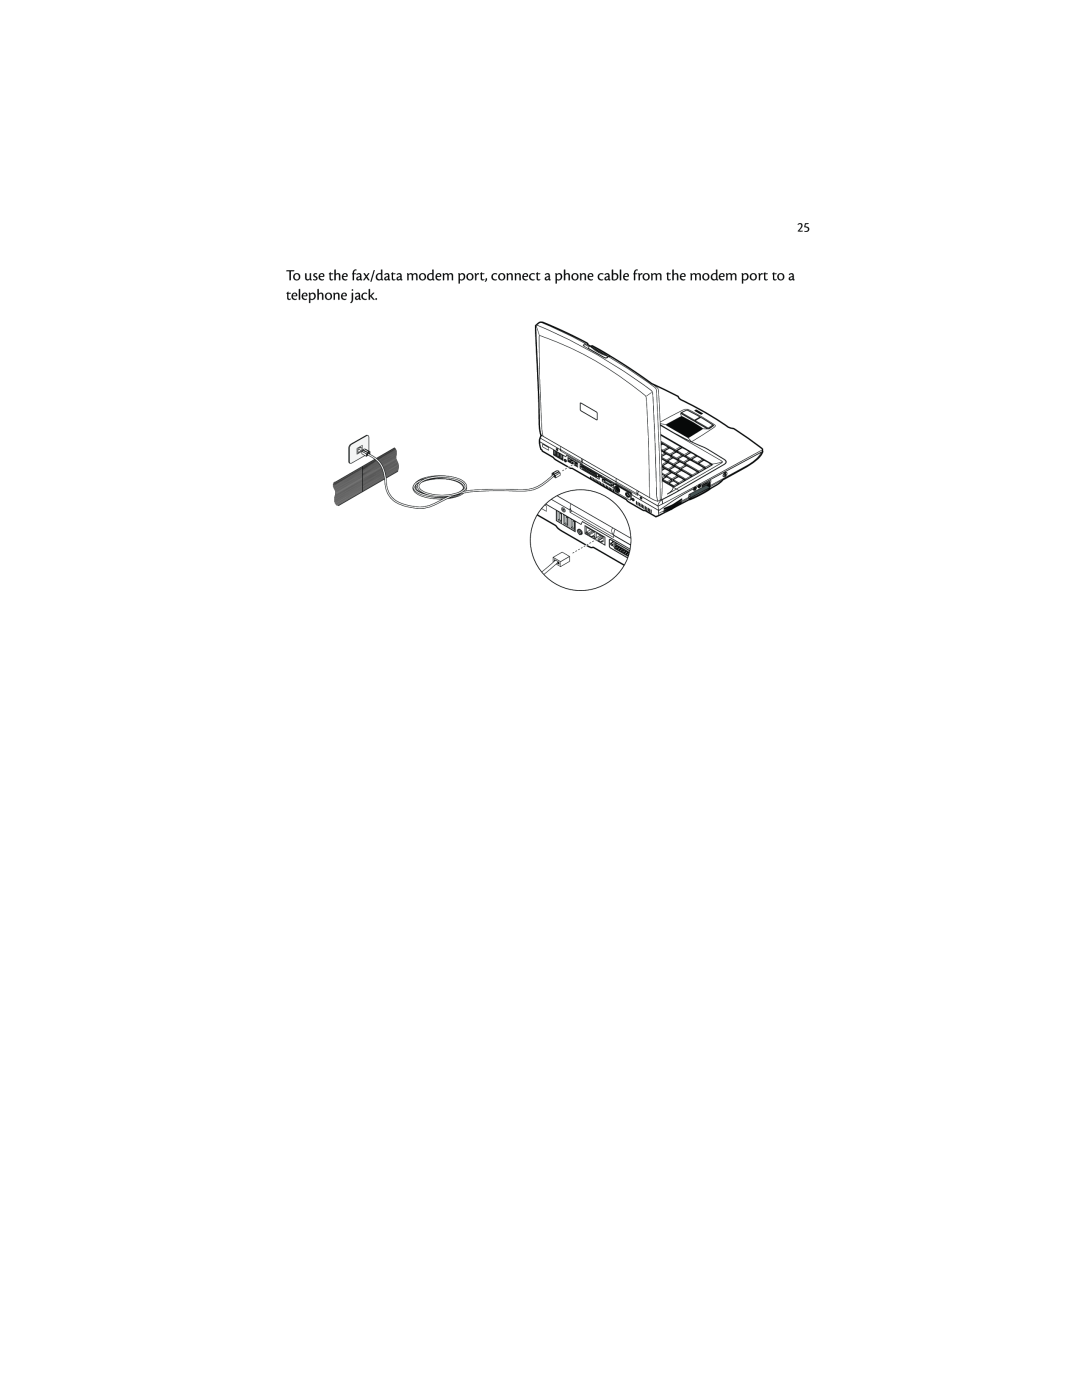 Acer 1400 manual 